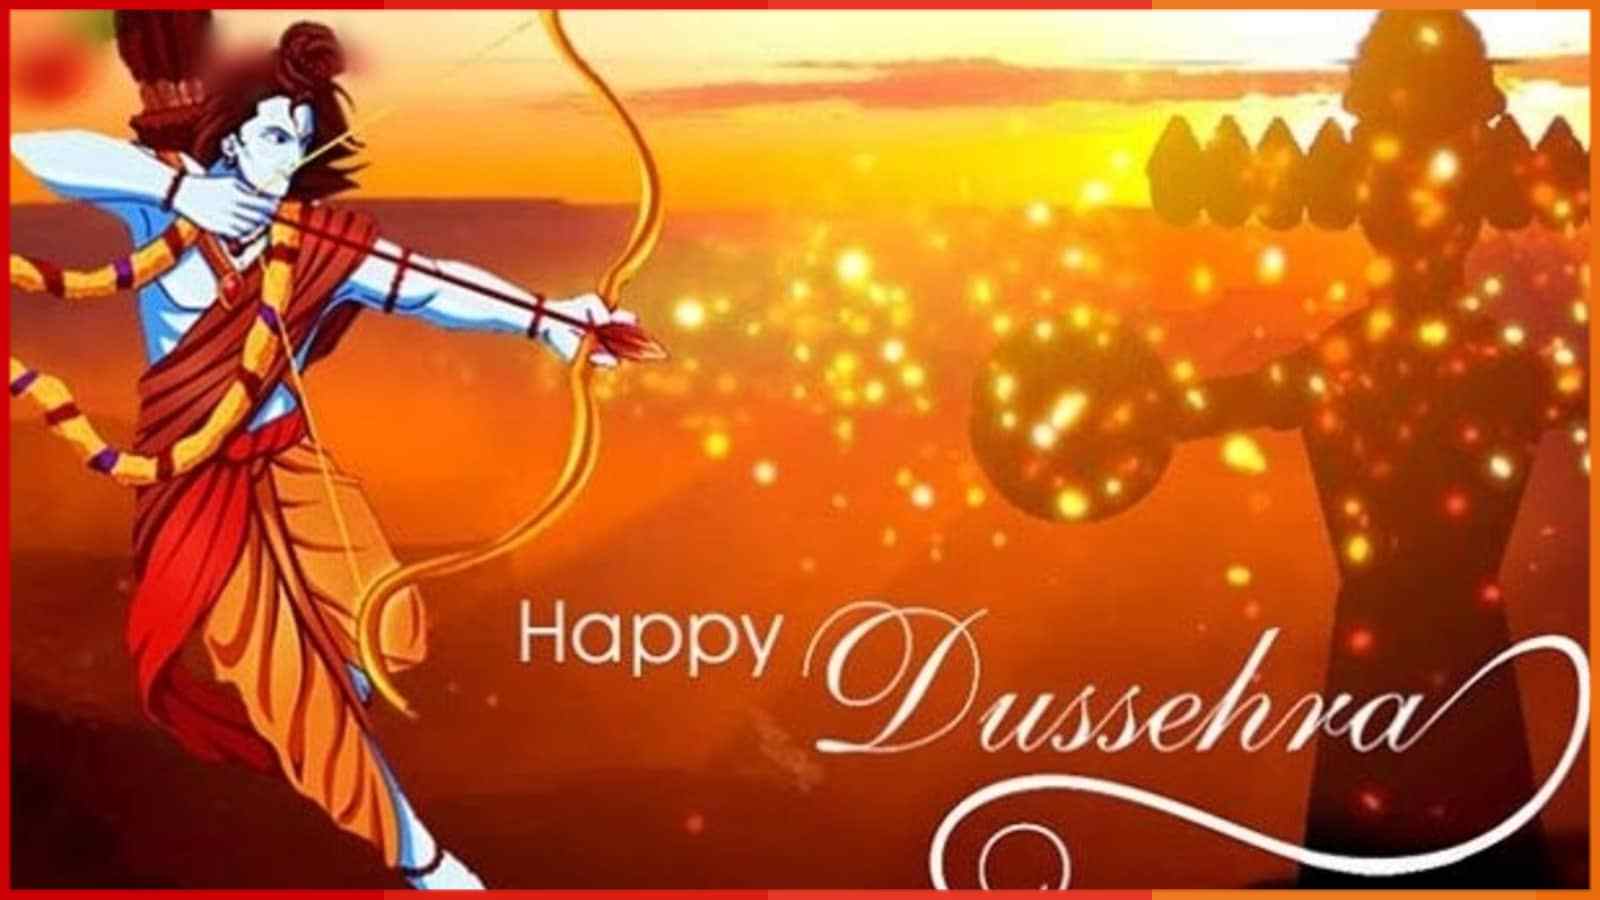 wish you happy dussehra images
